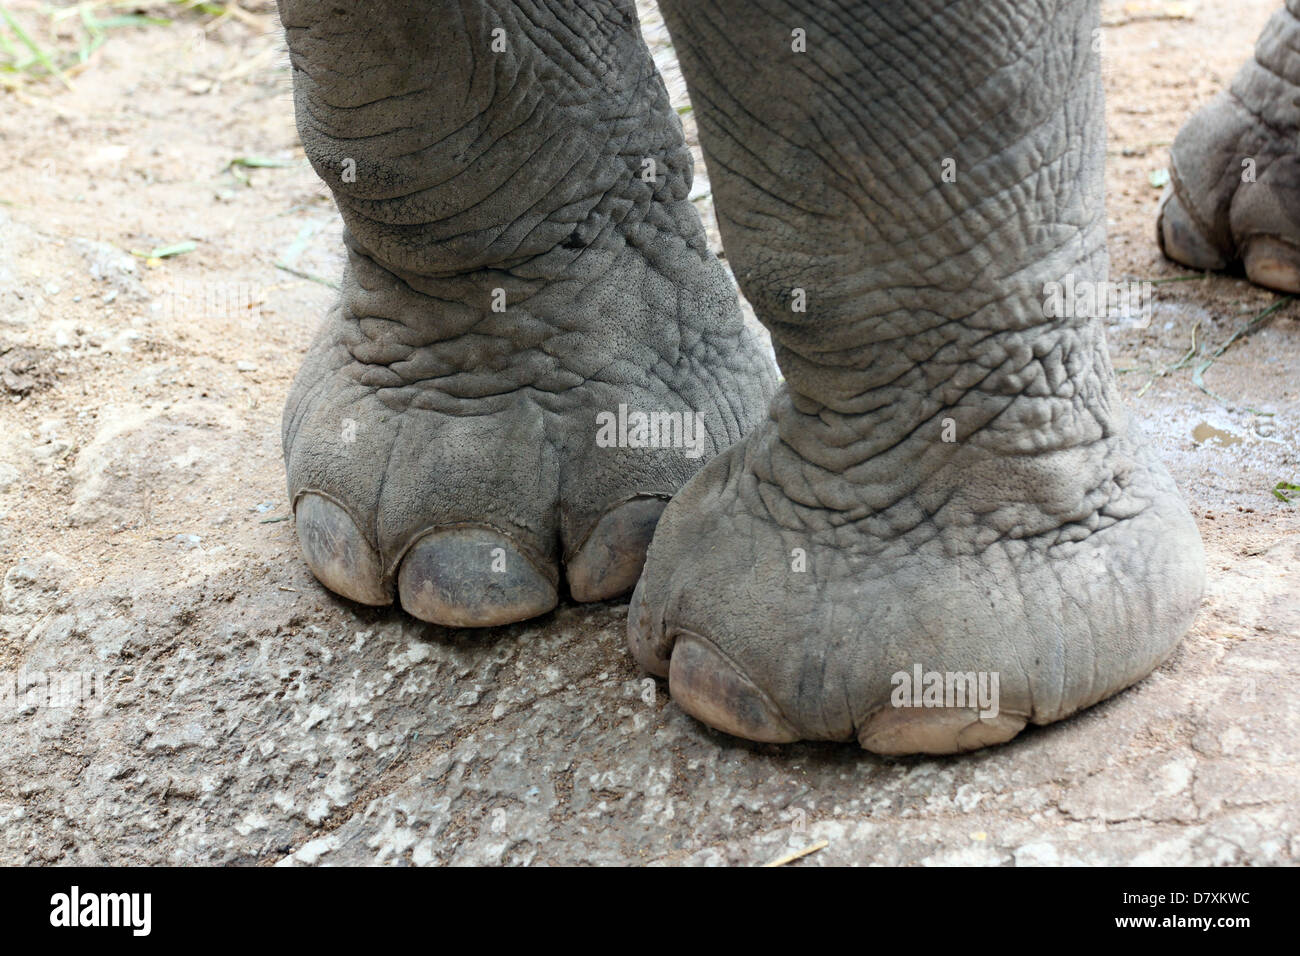 Asian elephants' feet healthy. Stock Photo